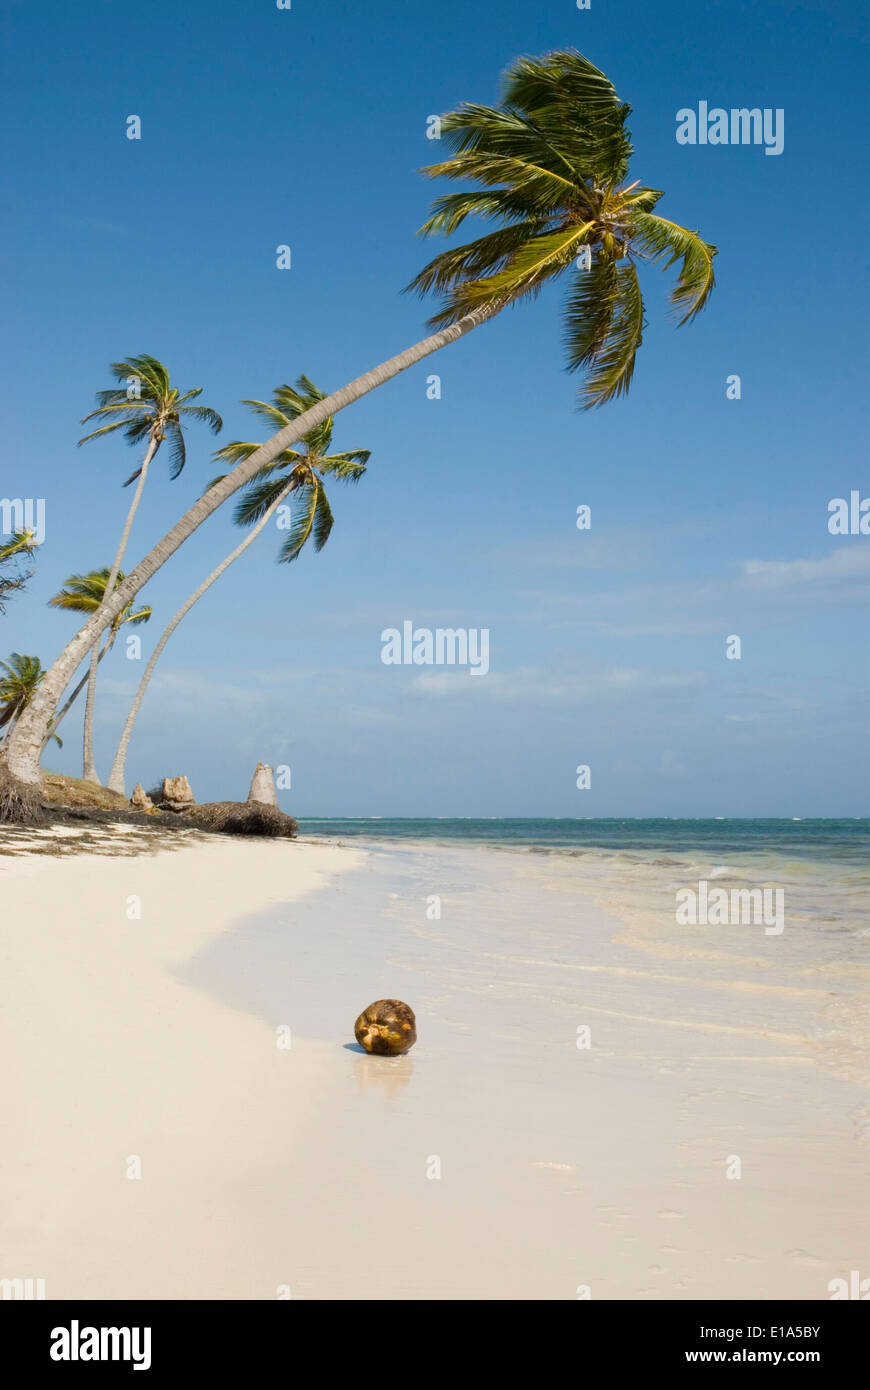 palm beach with Cocospalm (Cocos nucifera) Stock Photo